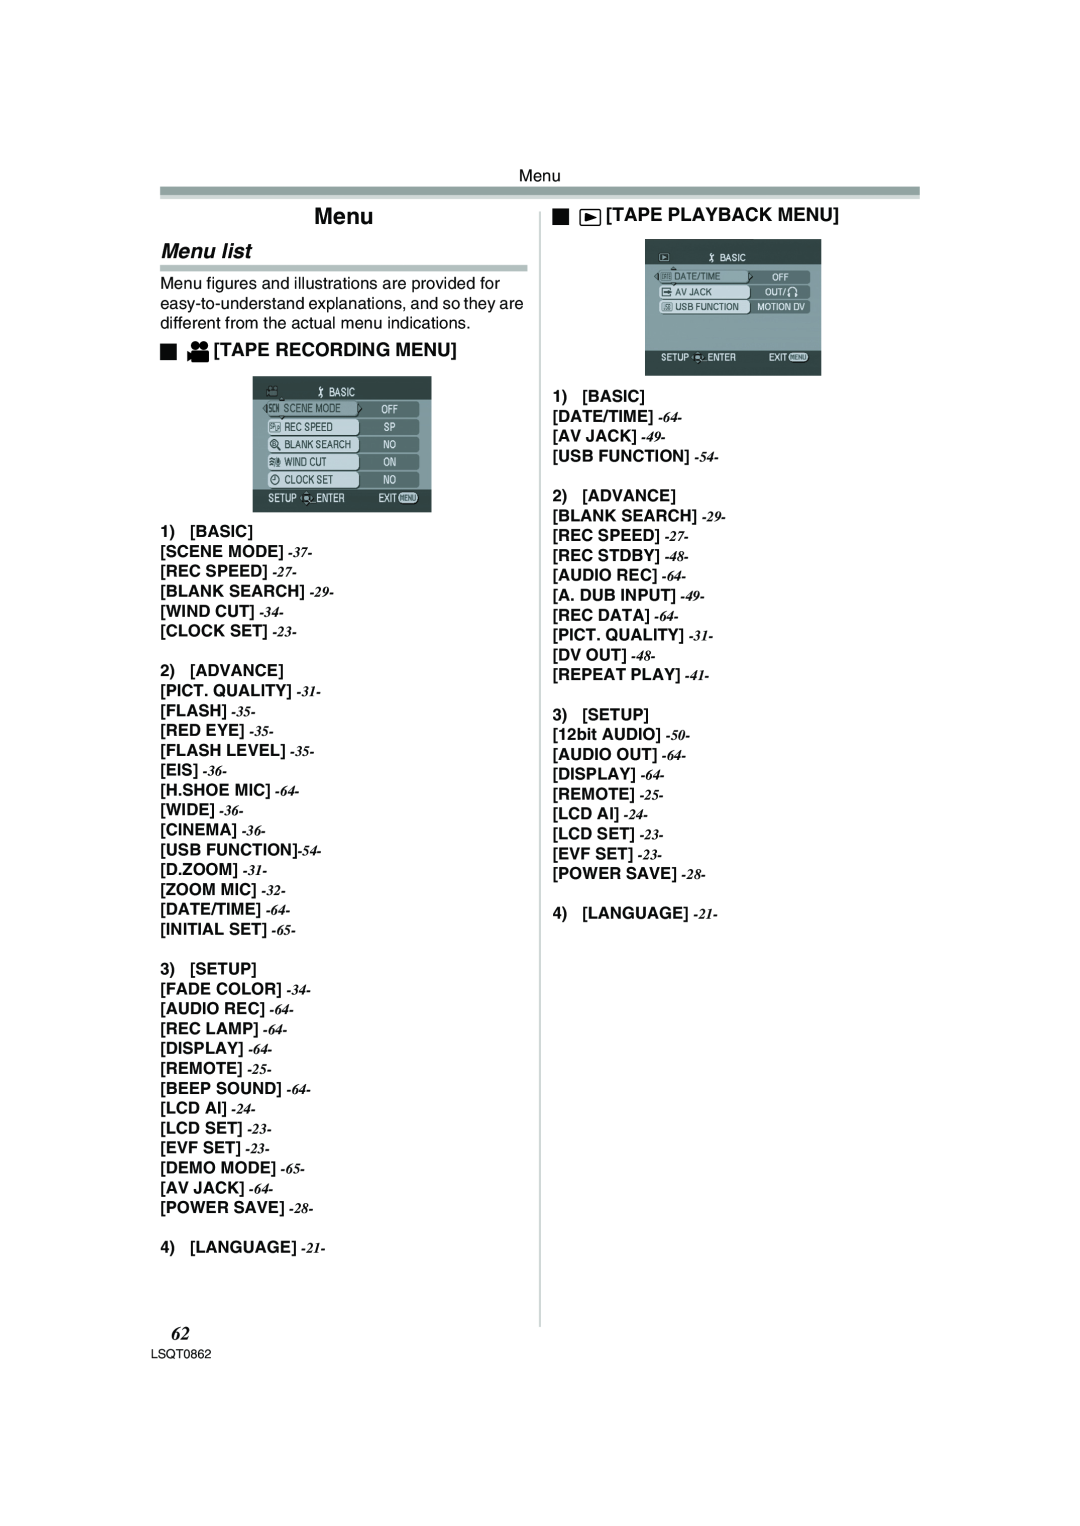 Panasonic PV-GS250 operating instructions Menu list, ª Tape Recording Menu, ª Tape Playback Menu, Setup, Language 